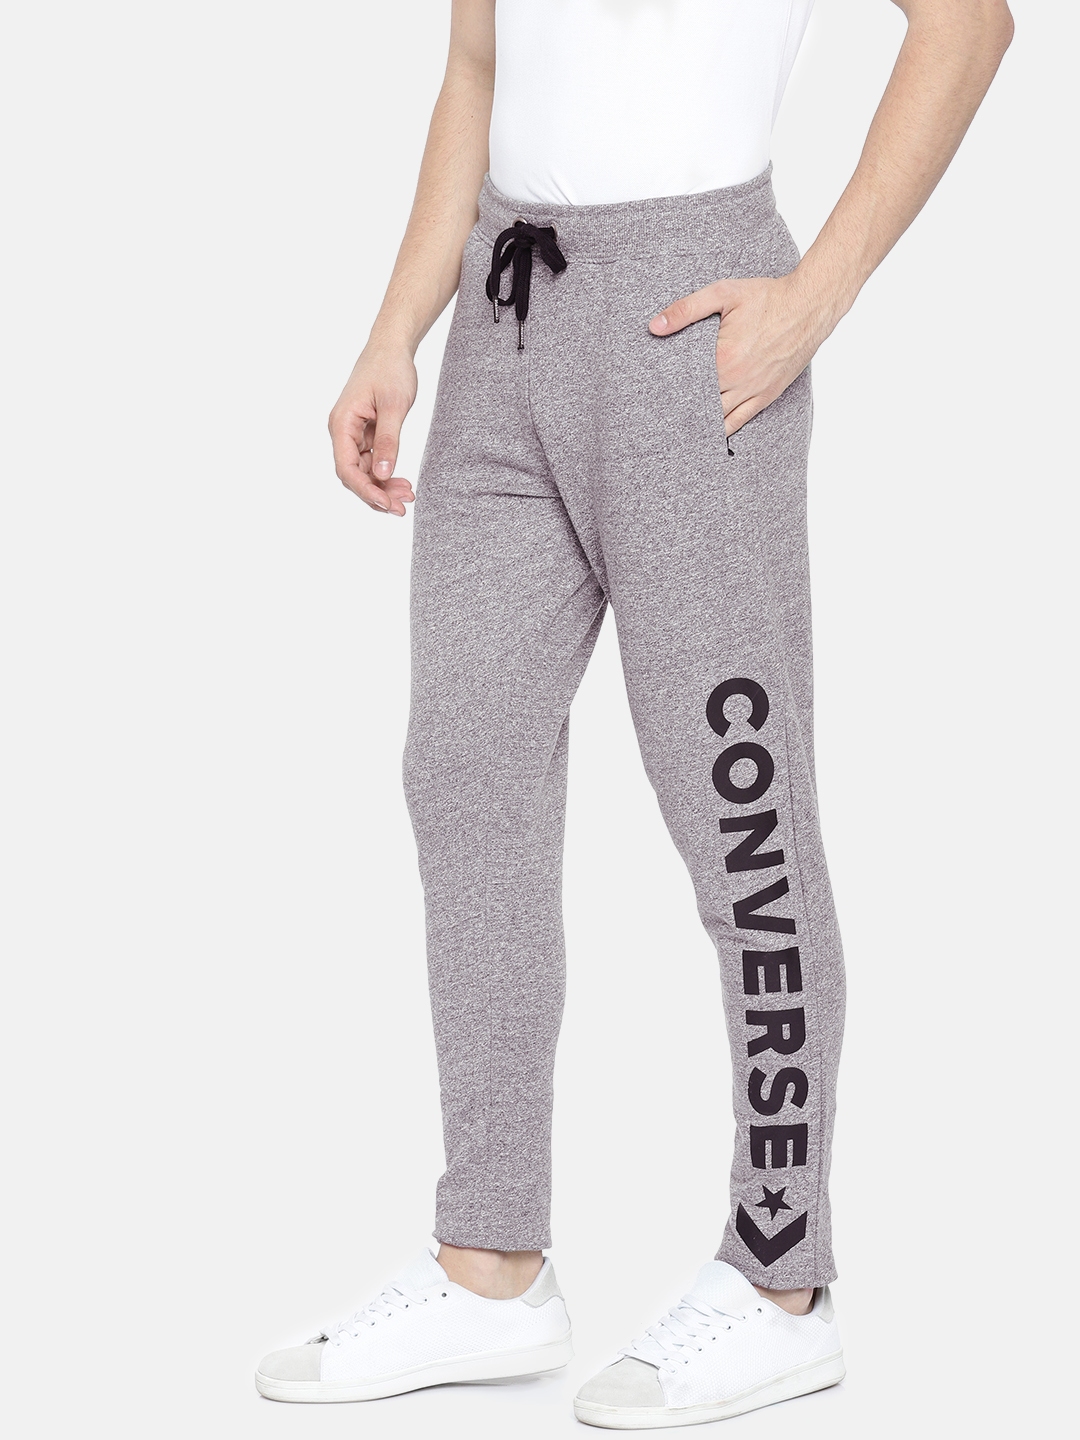 Converse Printed Men Grey Track Pants  Buy Converse Printed Men Grey Track  Pants Online at Best Prices in India  Flipkartcom